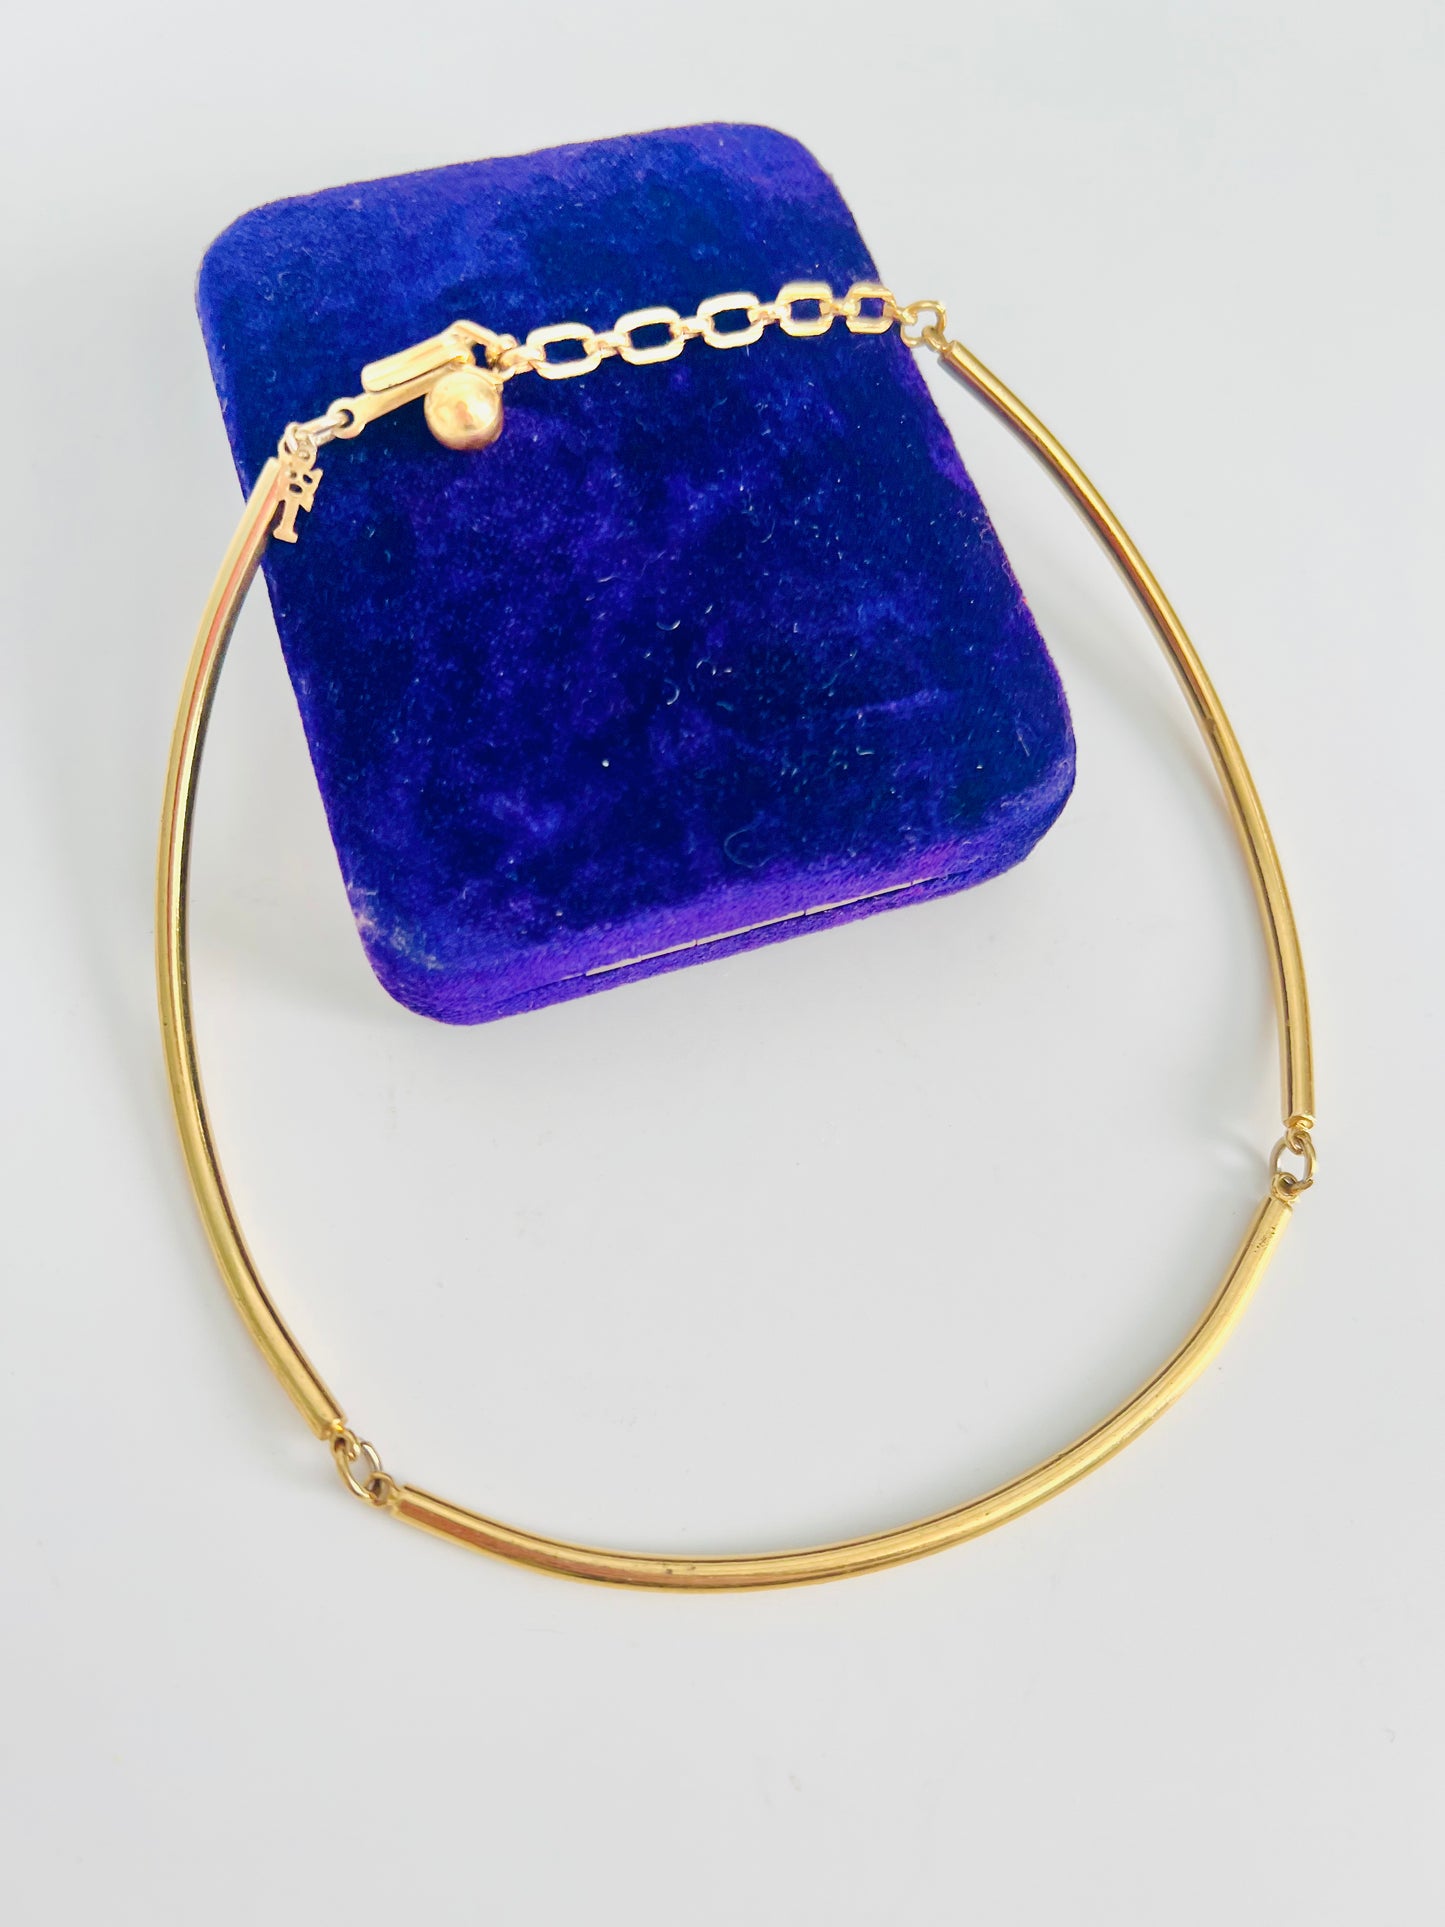 Vintage Trifari Gold Curved Bar Choker Necklace